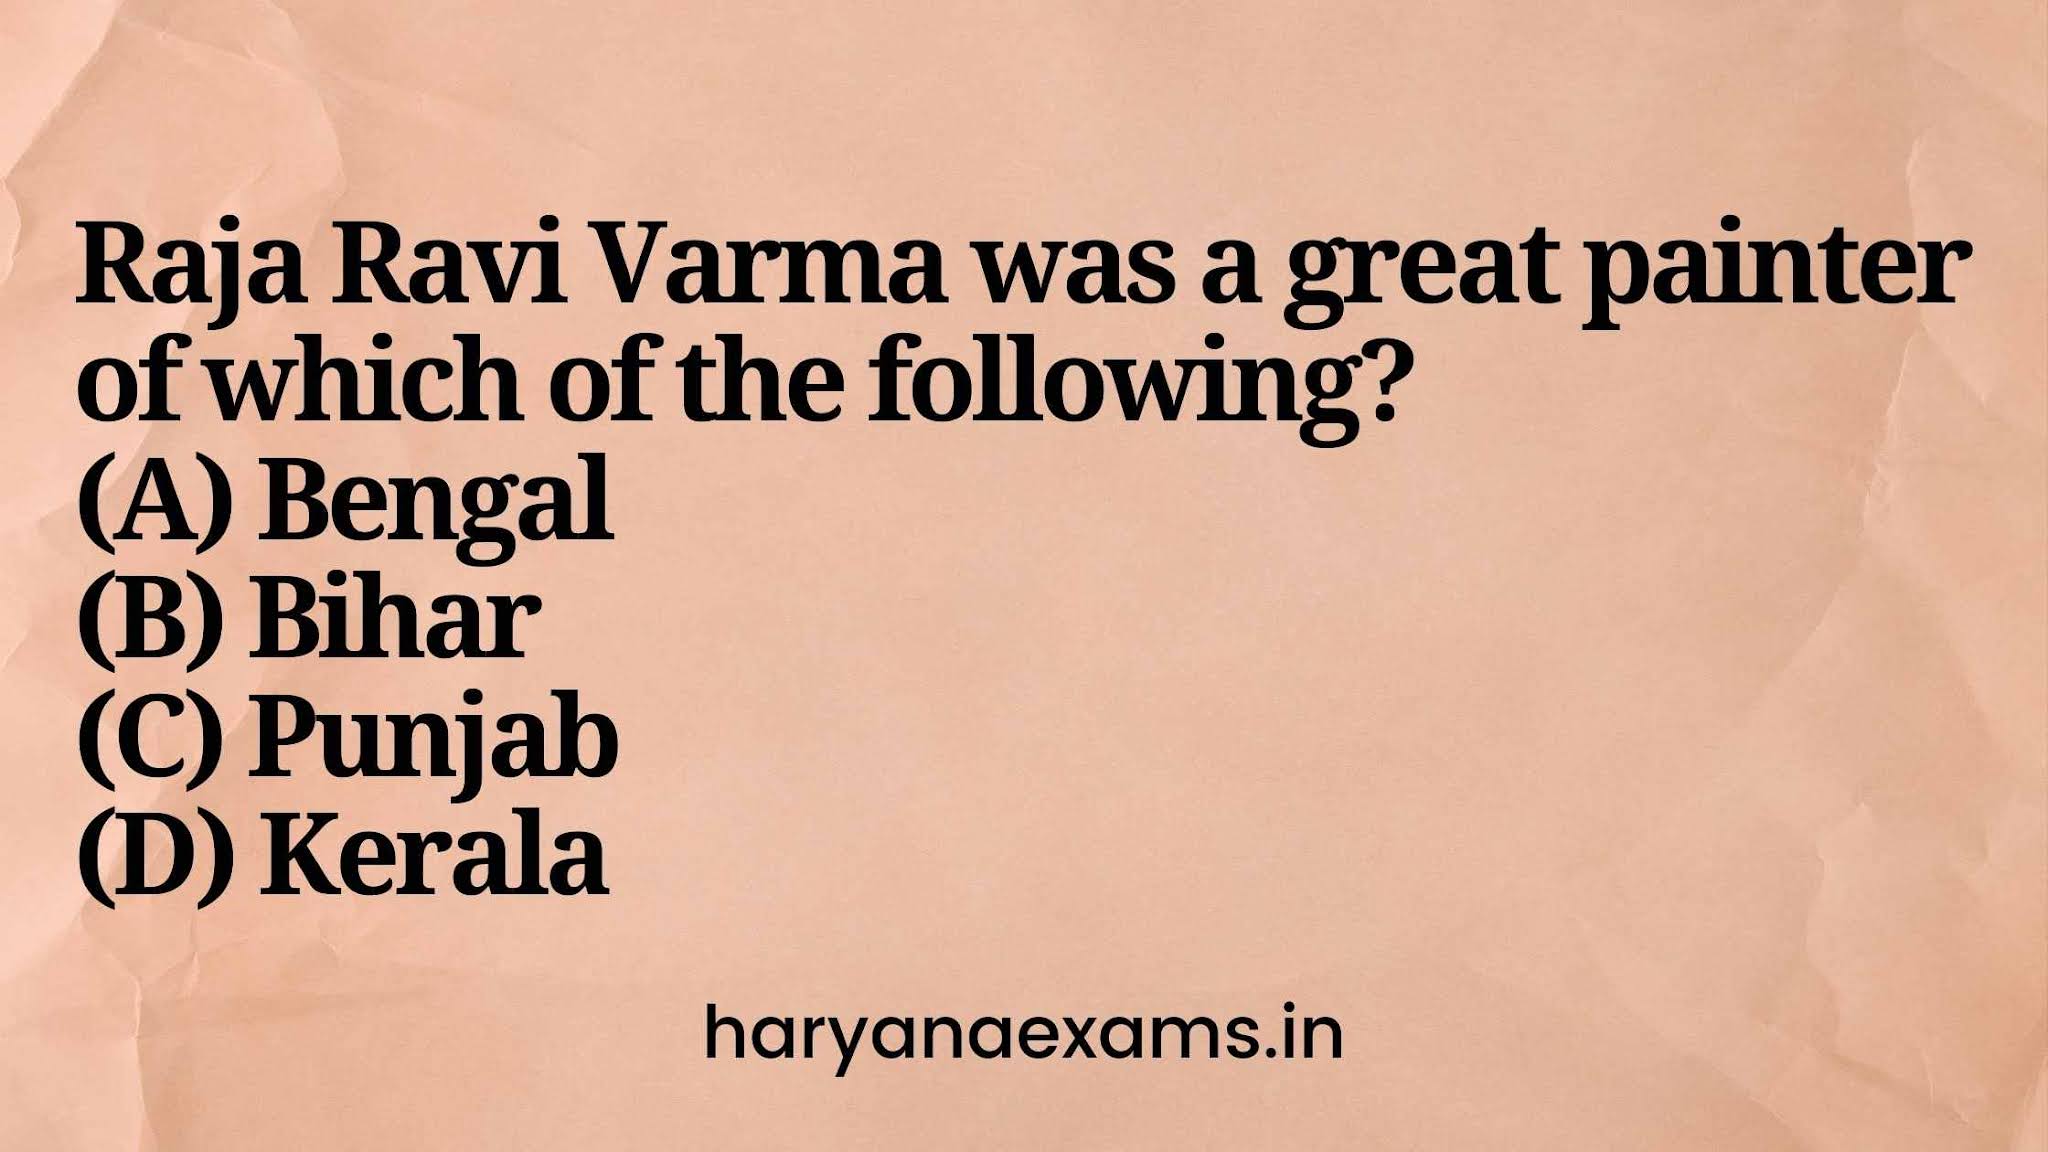 Raja Ravi Varma was a great painter of which of the following? (A) Bengal (B) Bihar (C) Punjab (D) Kerala